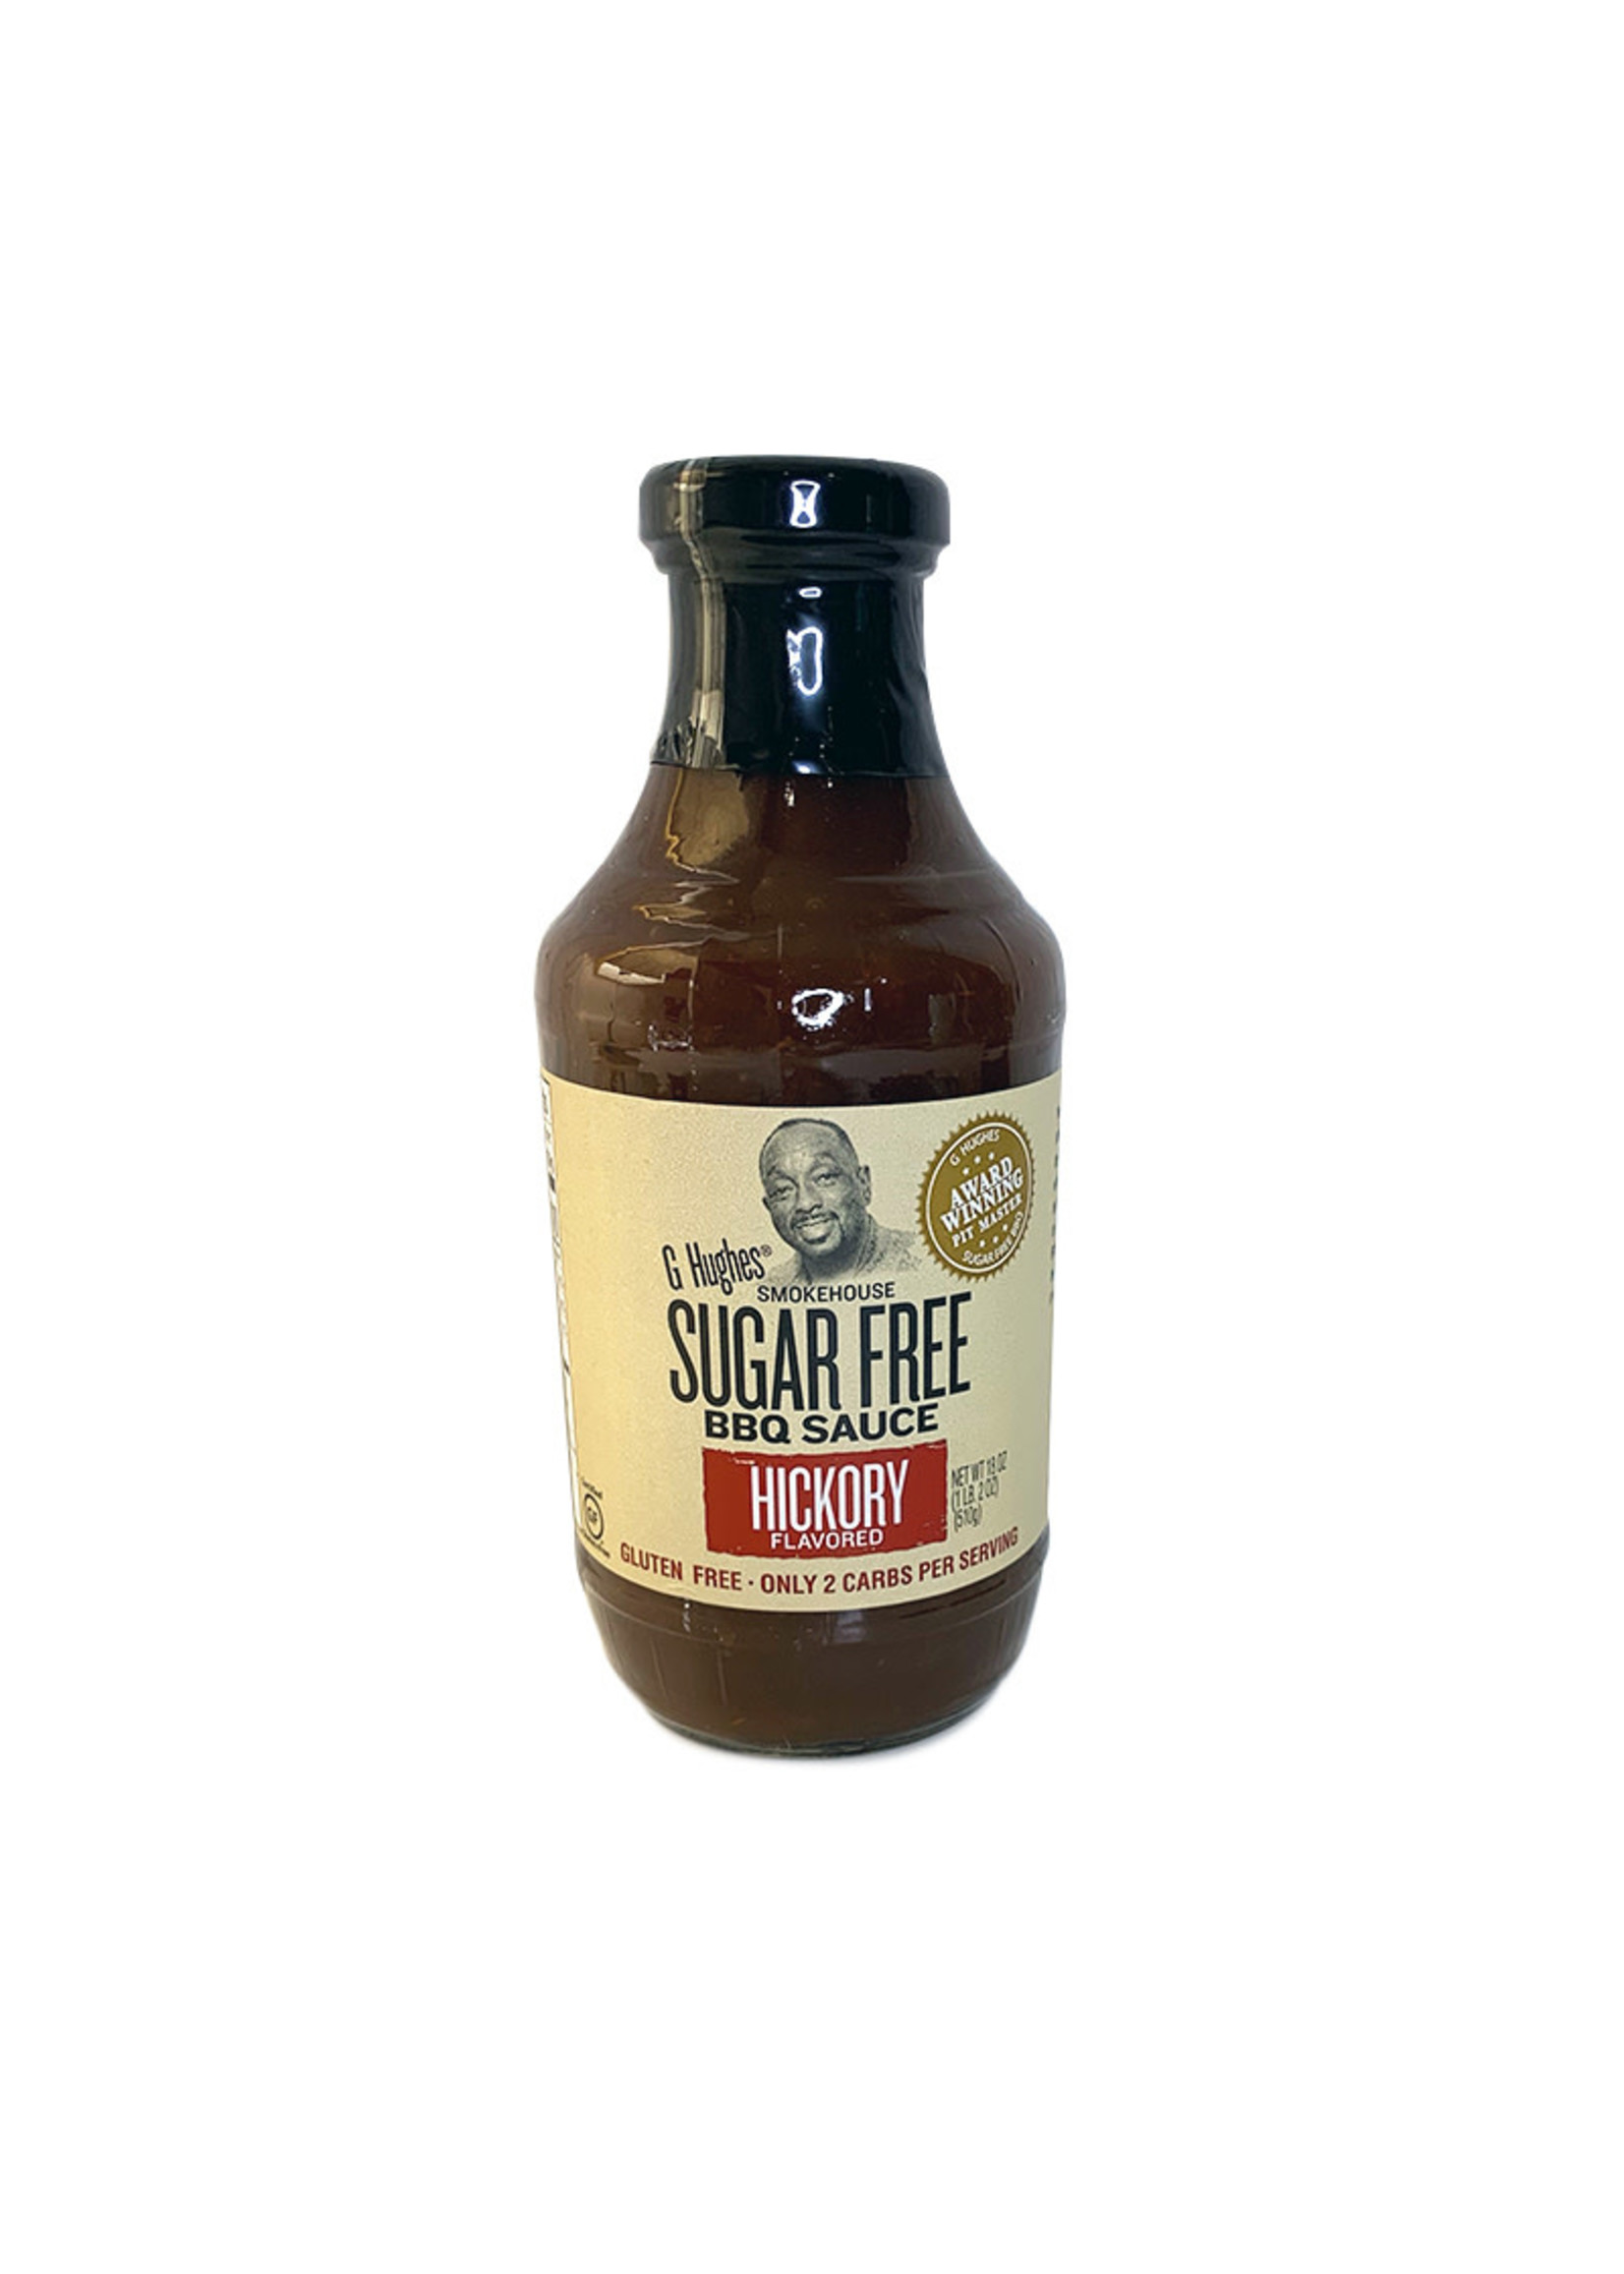 G Hughes Smokehouse G. Hughes - Sugar Free BBQ Sauce, Hickory (510g)